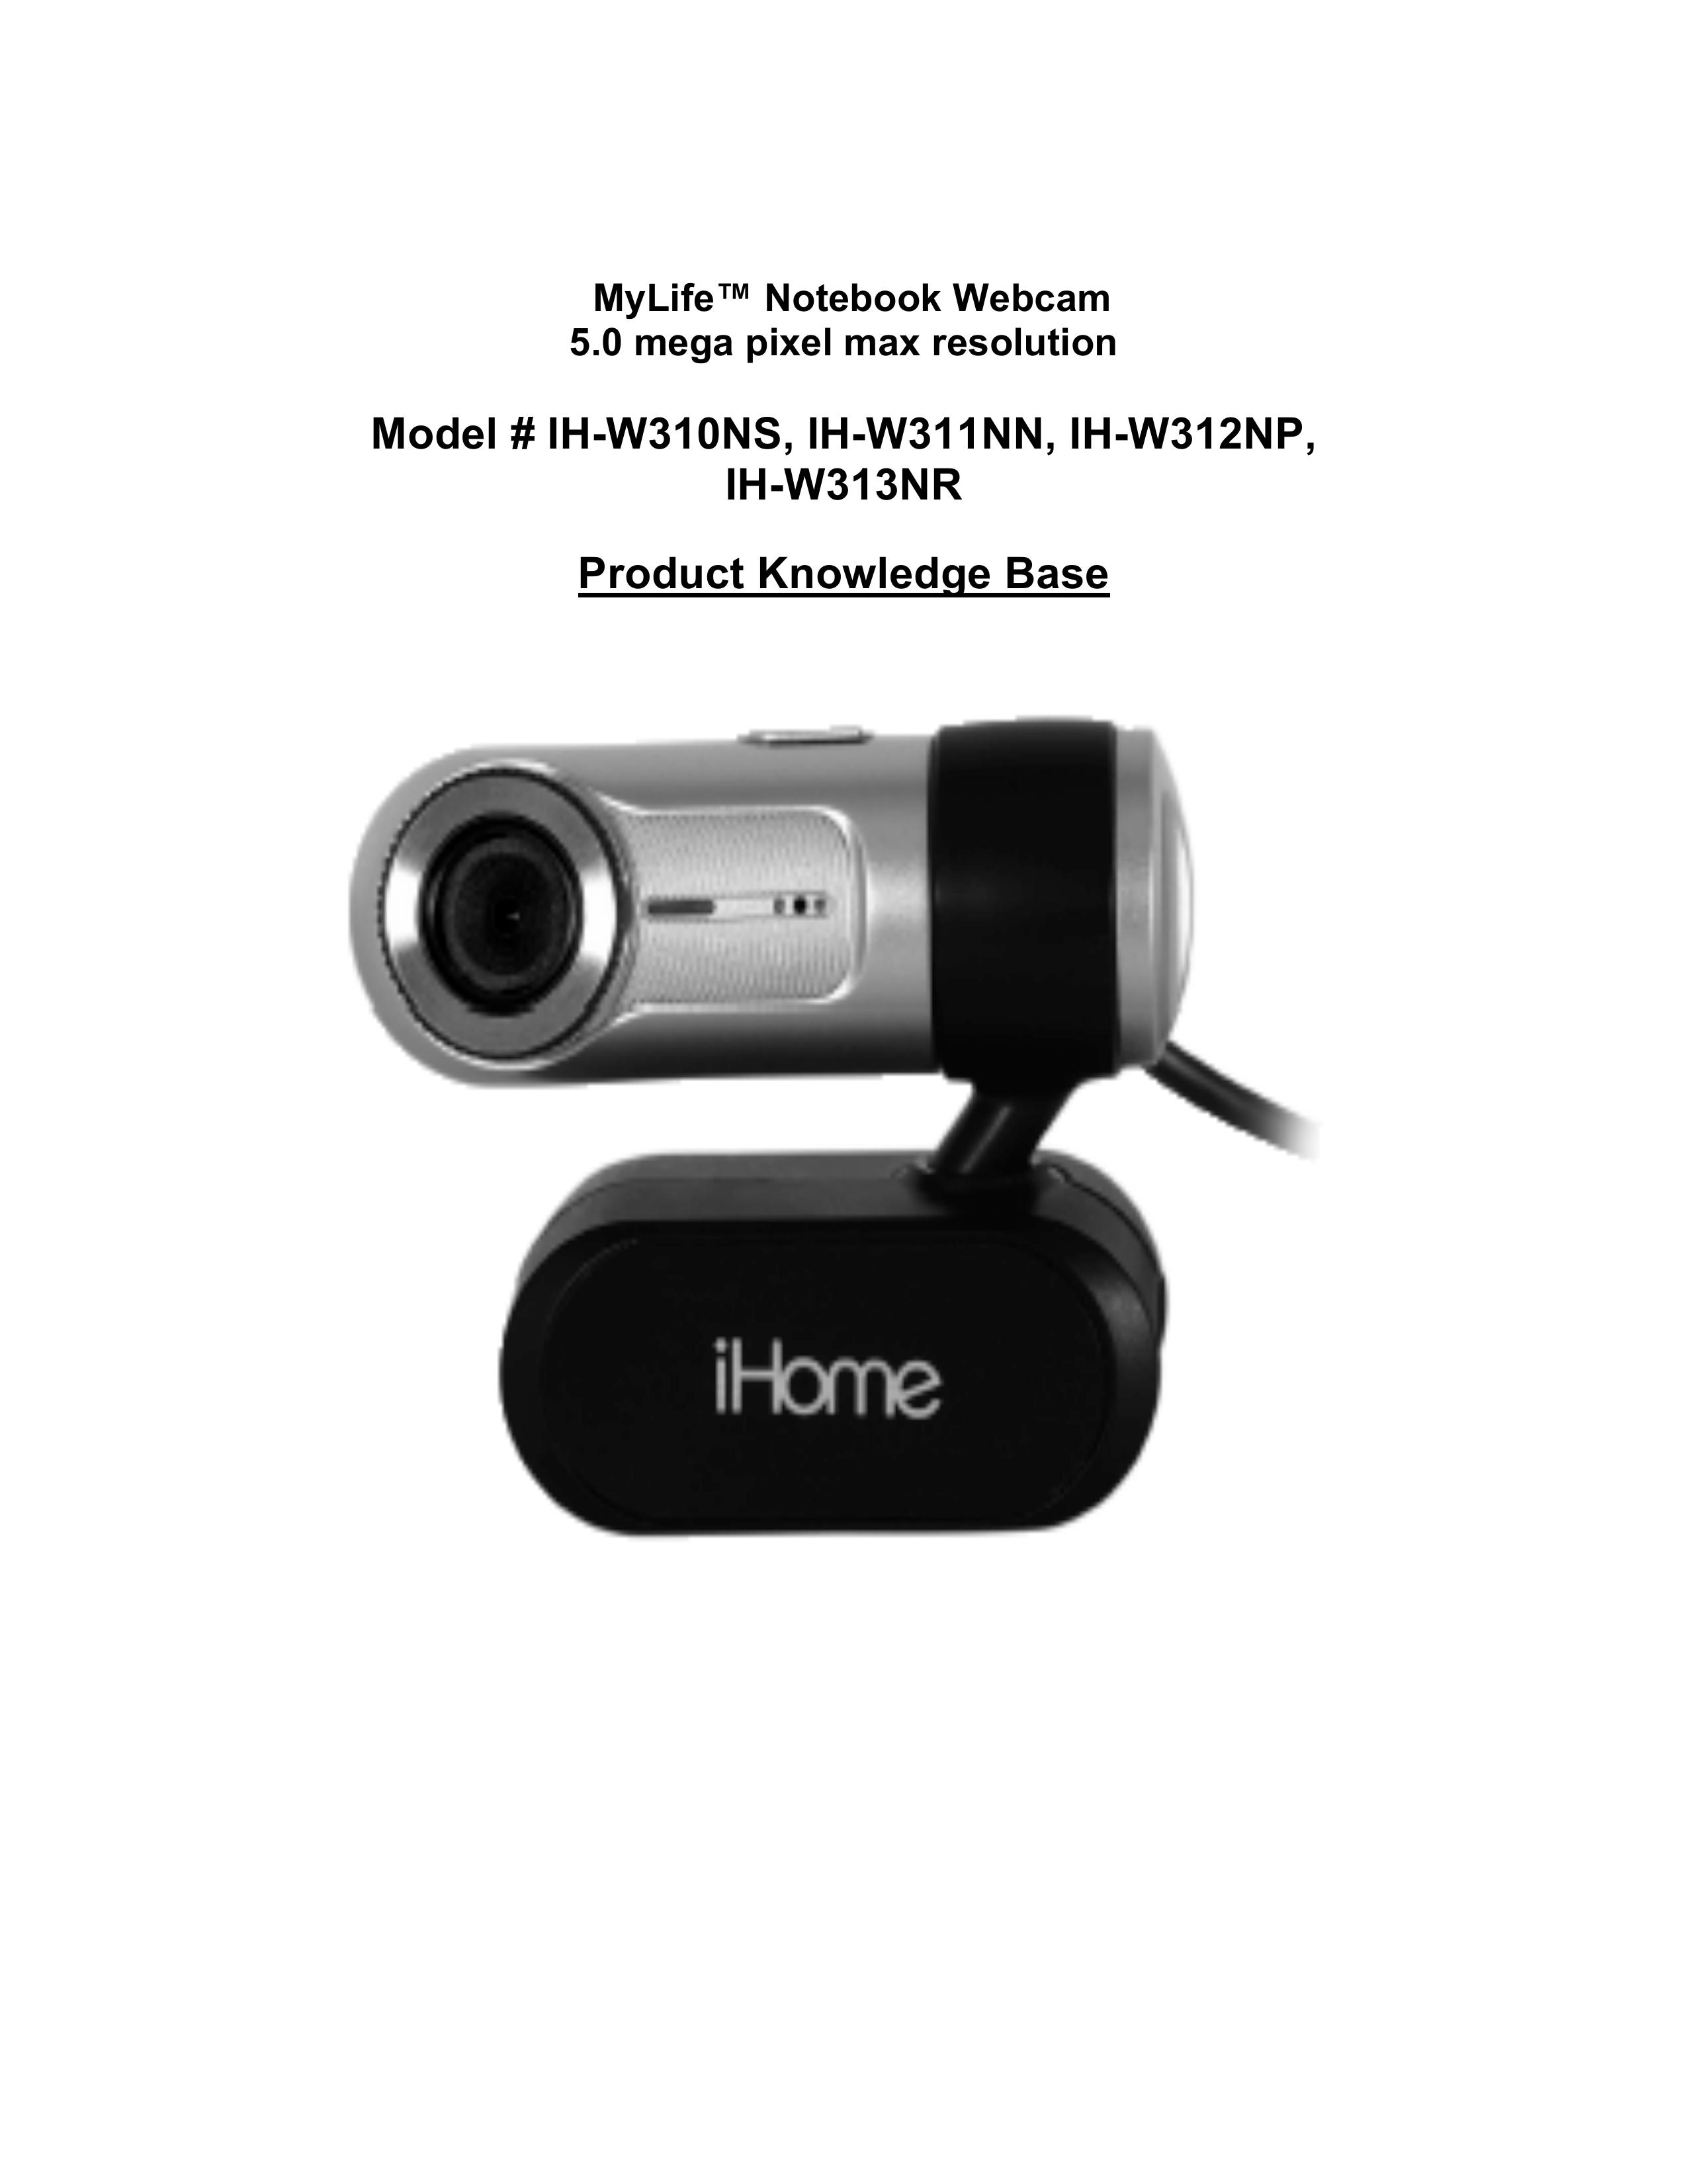 iHome IH-W310NS Digital Camera User Manual